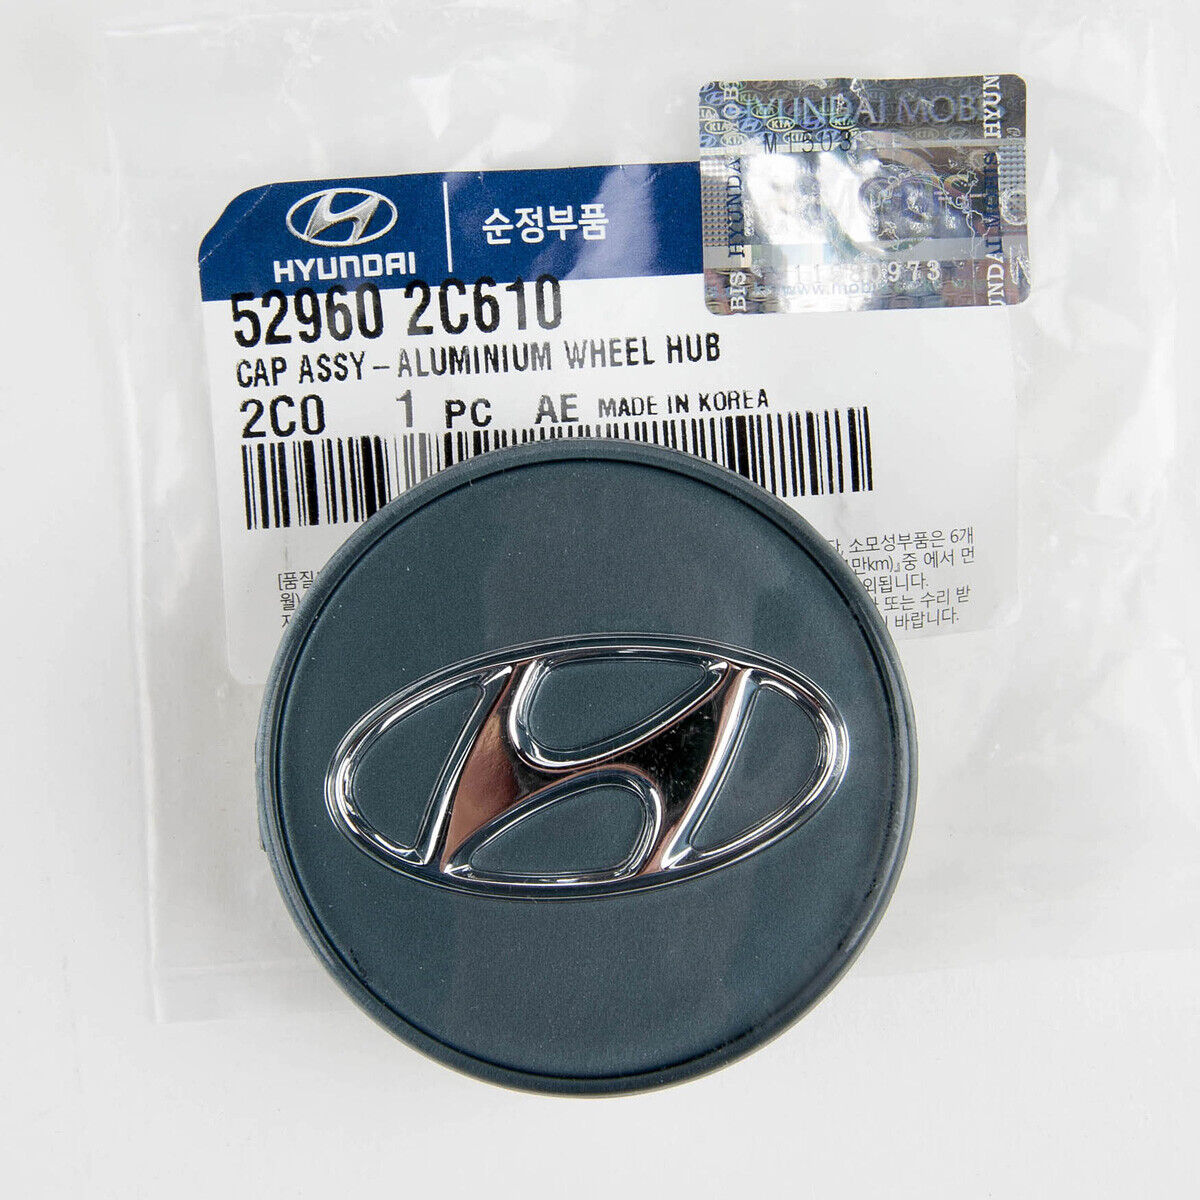 (1 PC) Genuine Hyundai Wheel Center Cap for 03-08 Tiburon 17' Wheel 52960-2C610